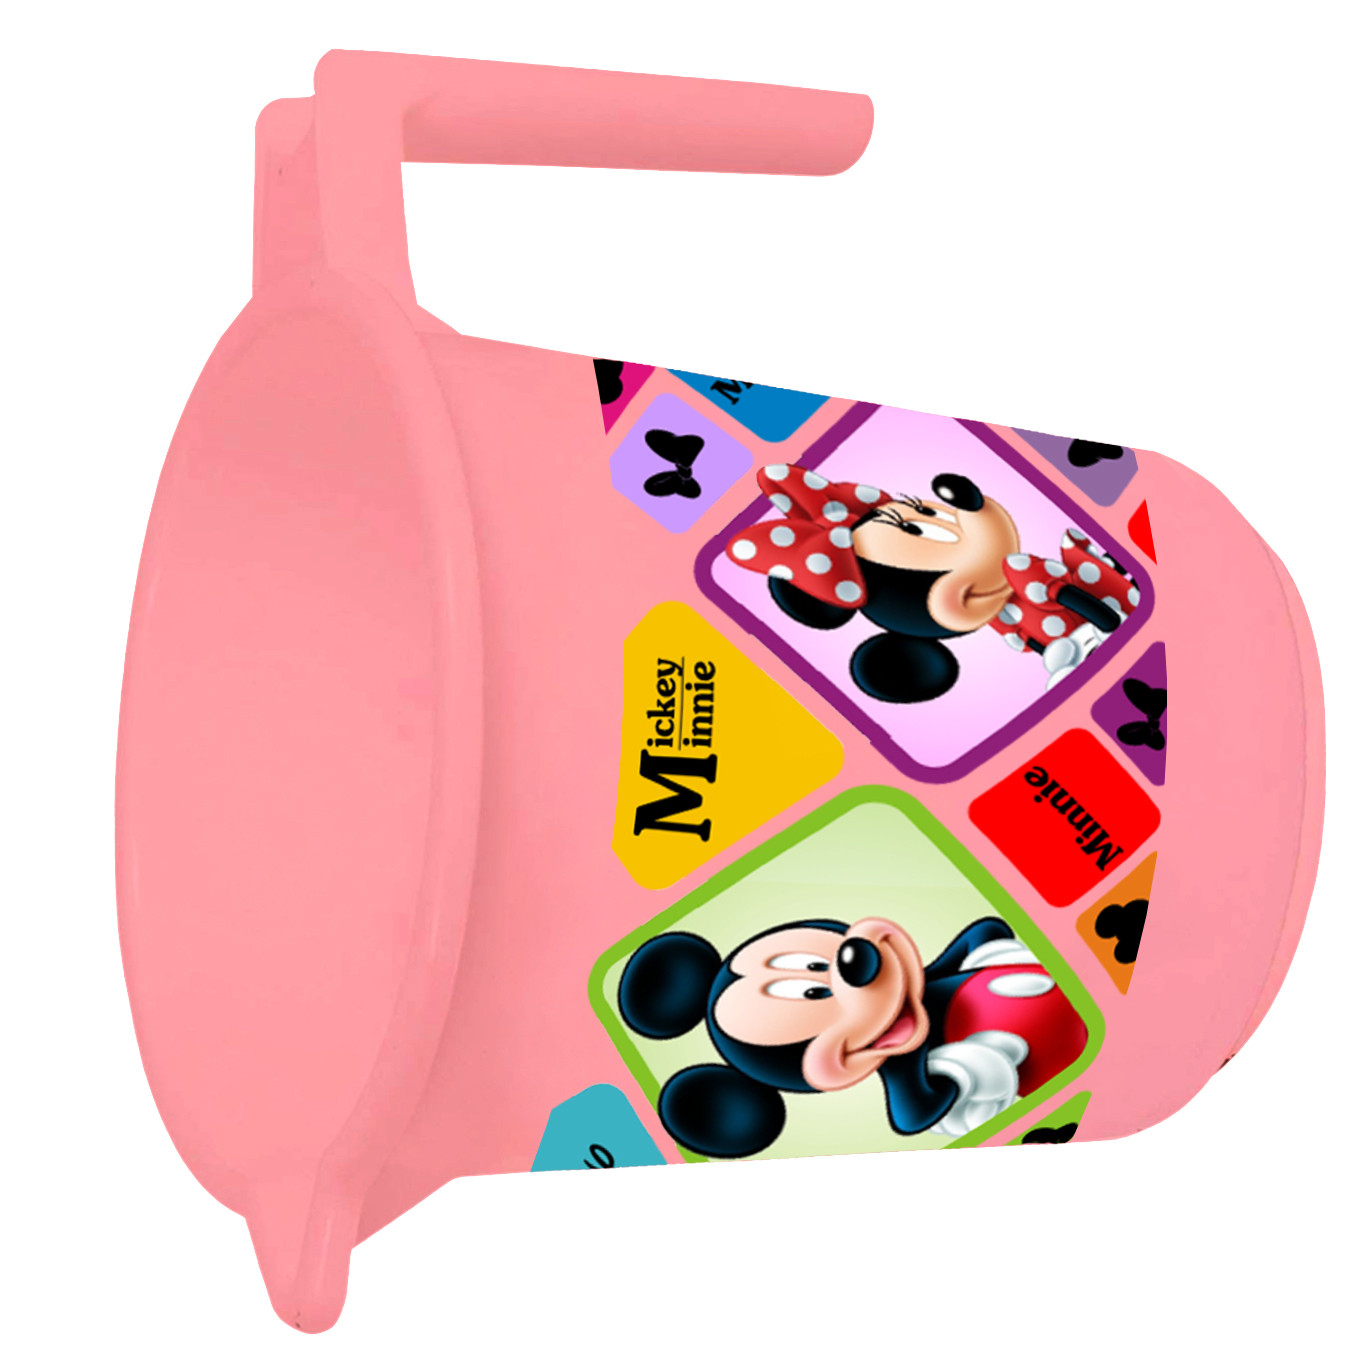 Kuber Industries Disney Mickey Minnie Print 12 Pieces Unbreakable Strong Plastic Bathroom Mug,500 ML (Pink & White) -HS_35_KUBMART17661